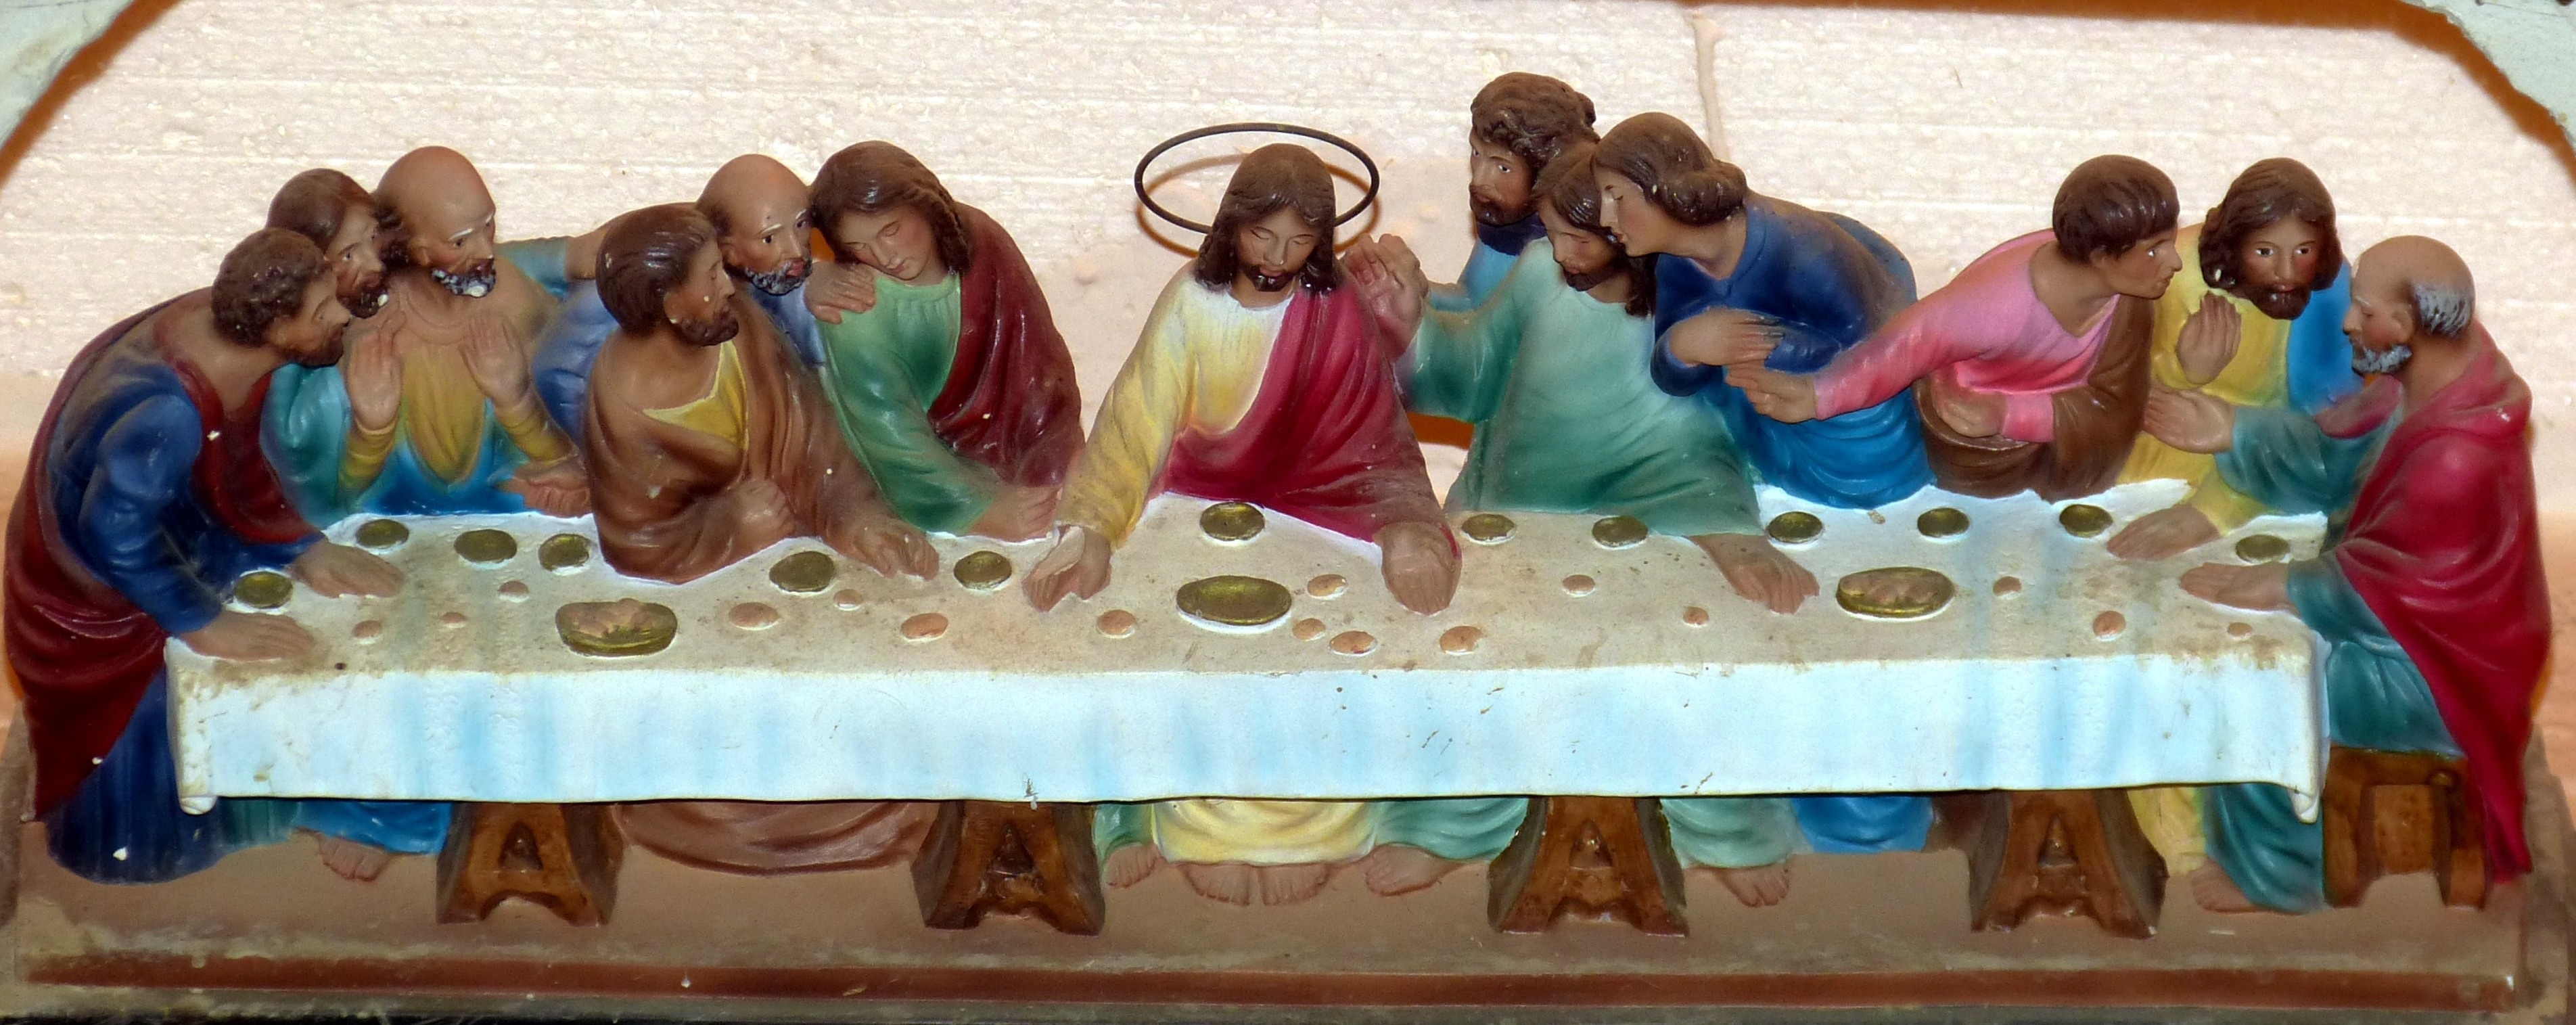 The Last Supper Ornament - Kue Ulang Tahun Kristen , HD Wallpaper & Backgrounds